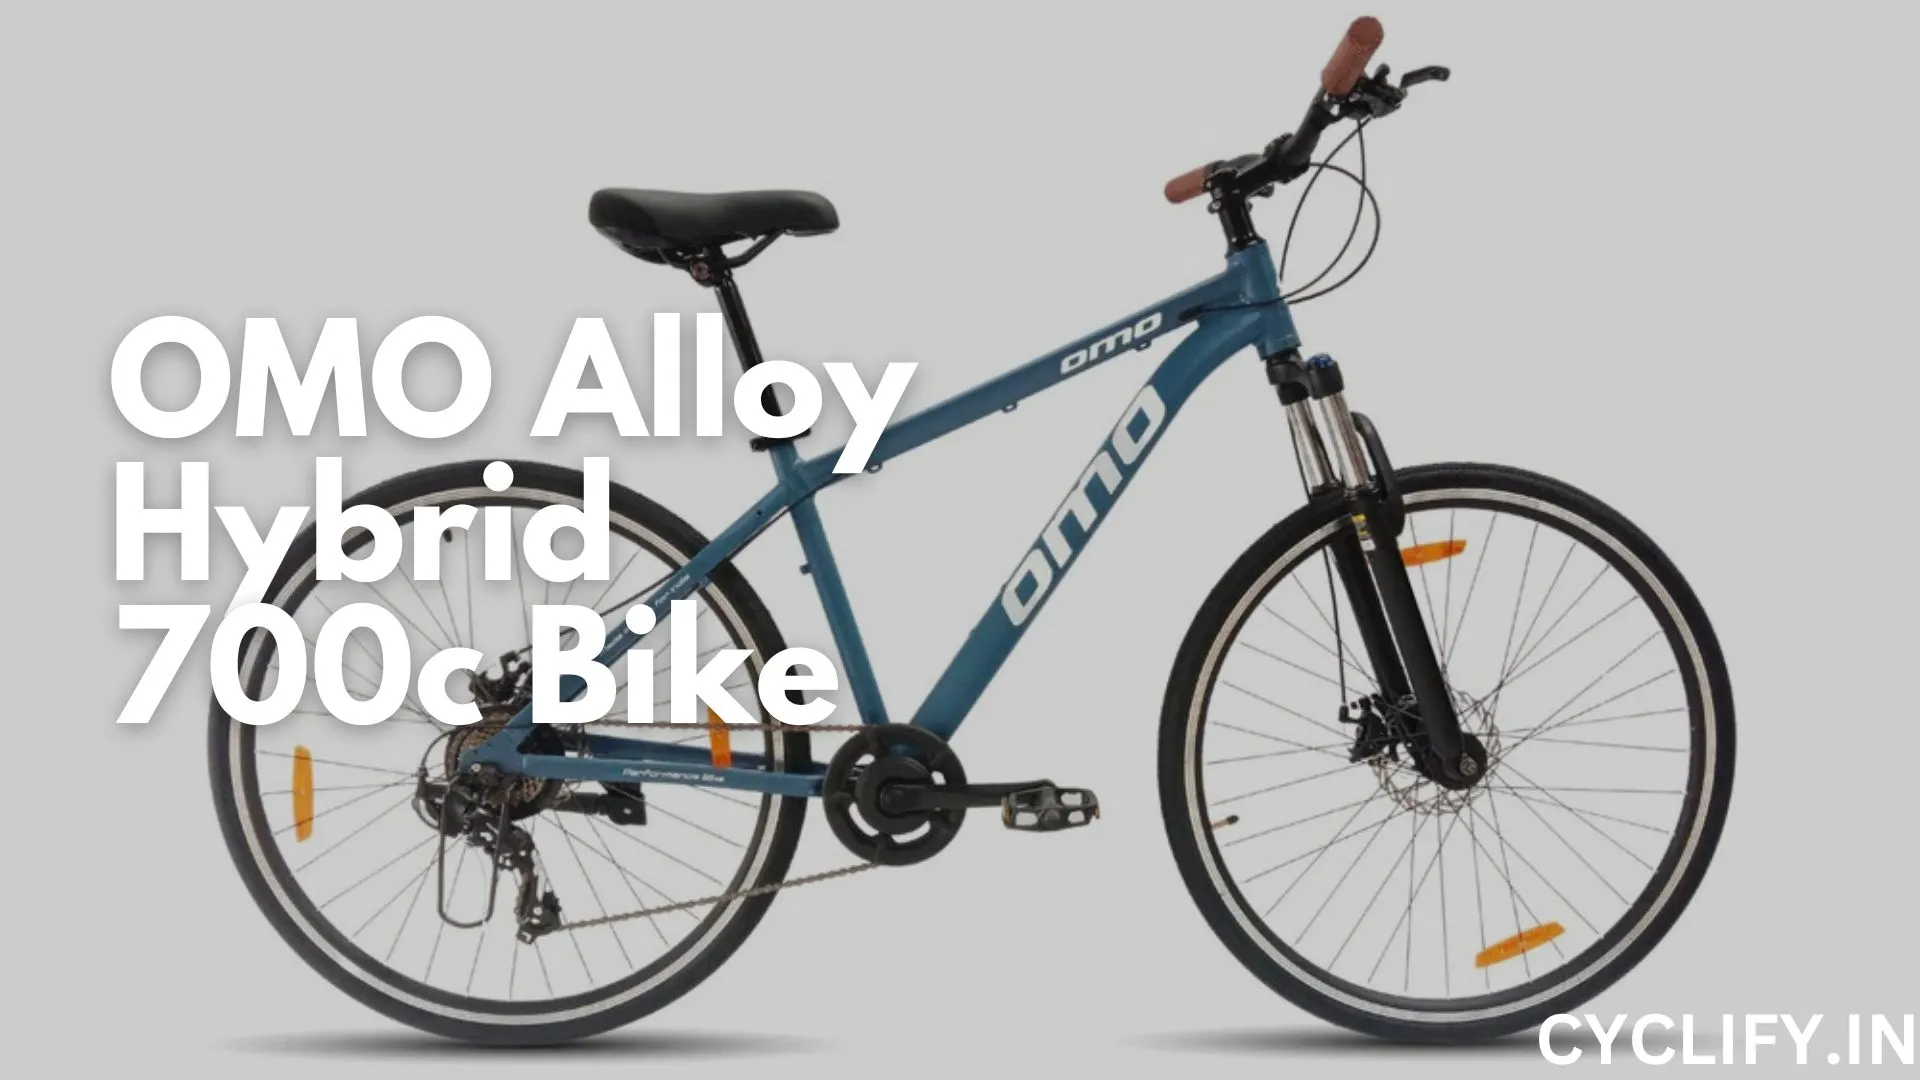 OMO Alloy Hybrid 700c Bike Review